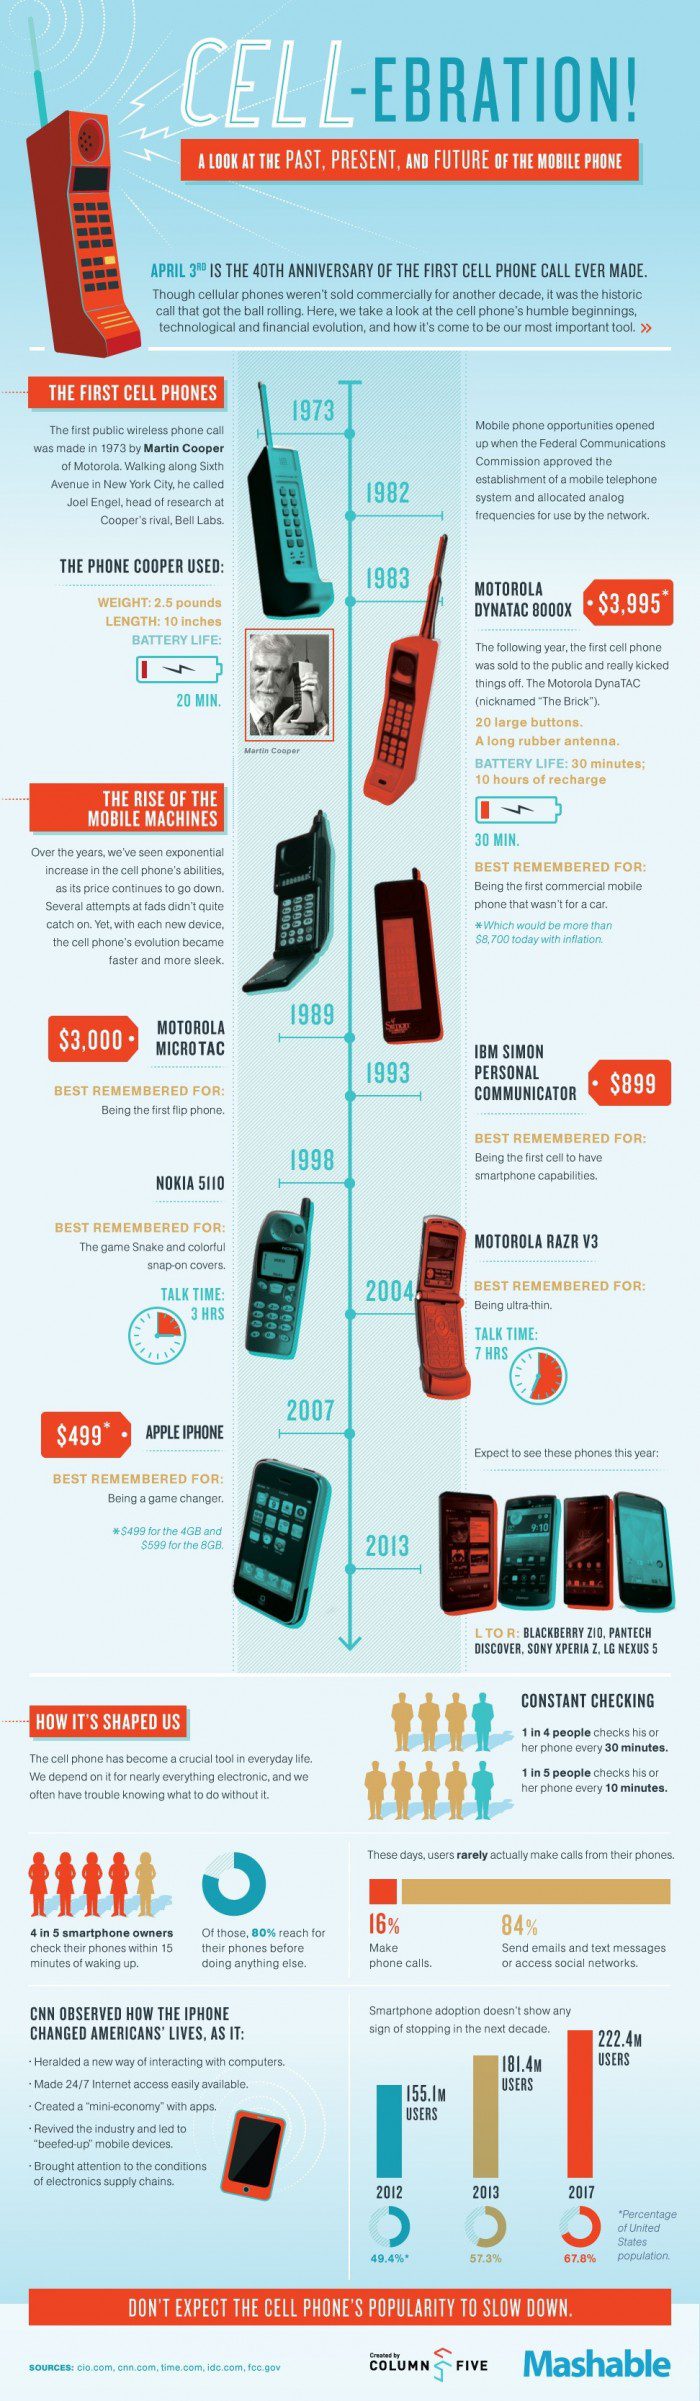 cellphone-anniversary